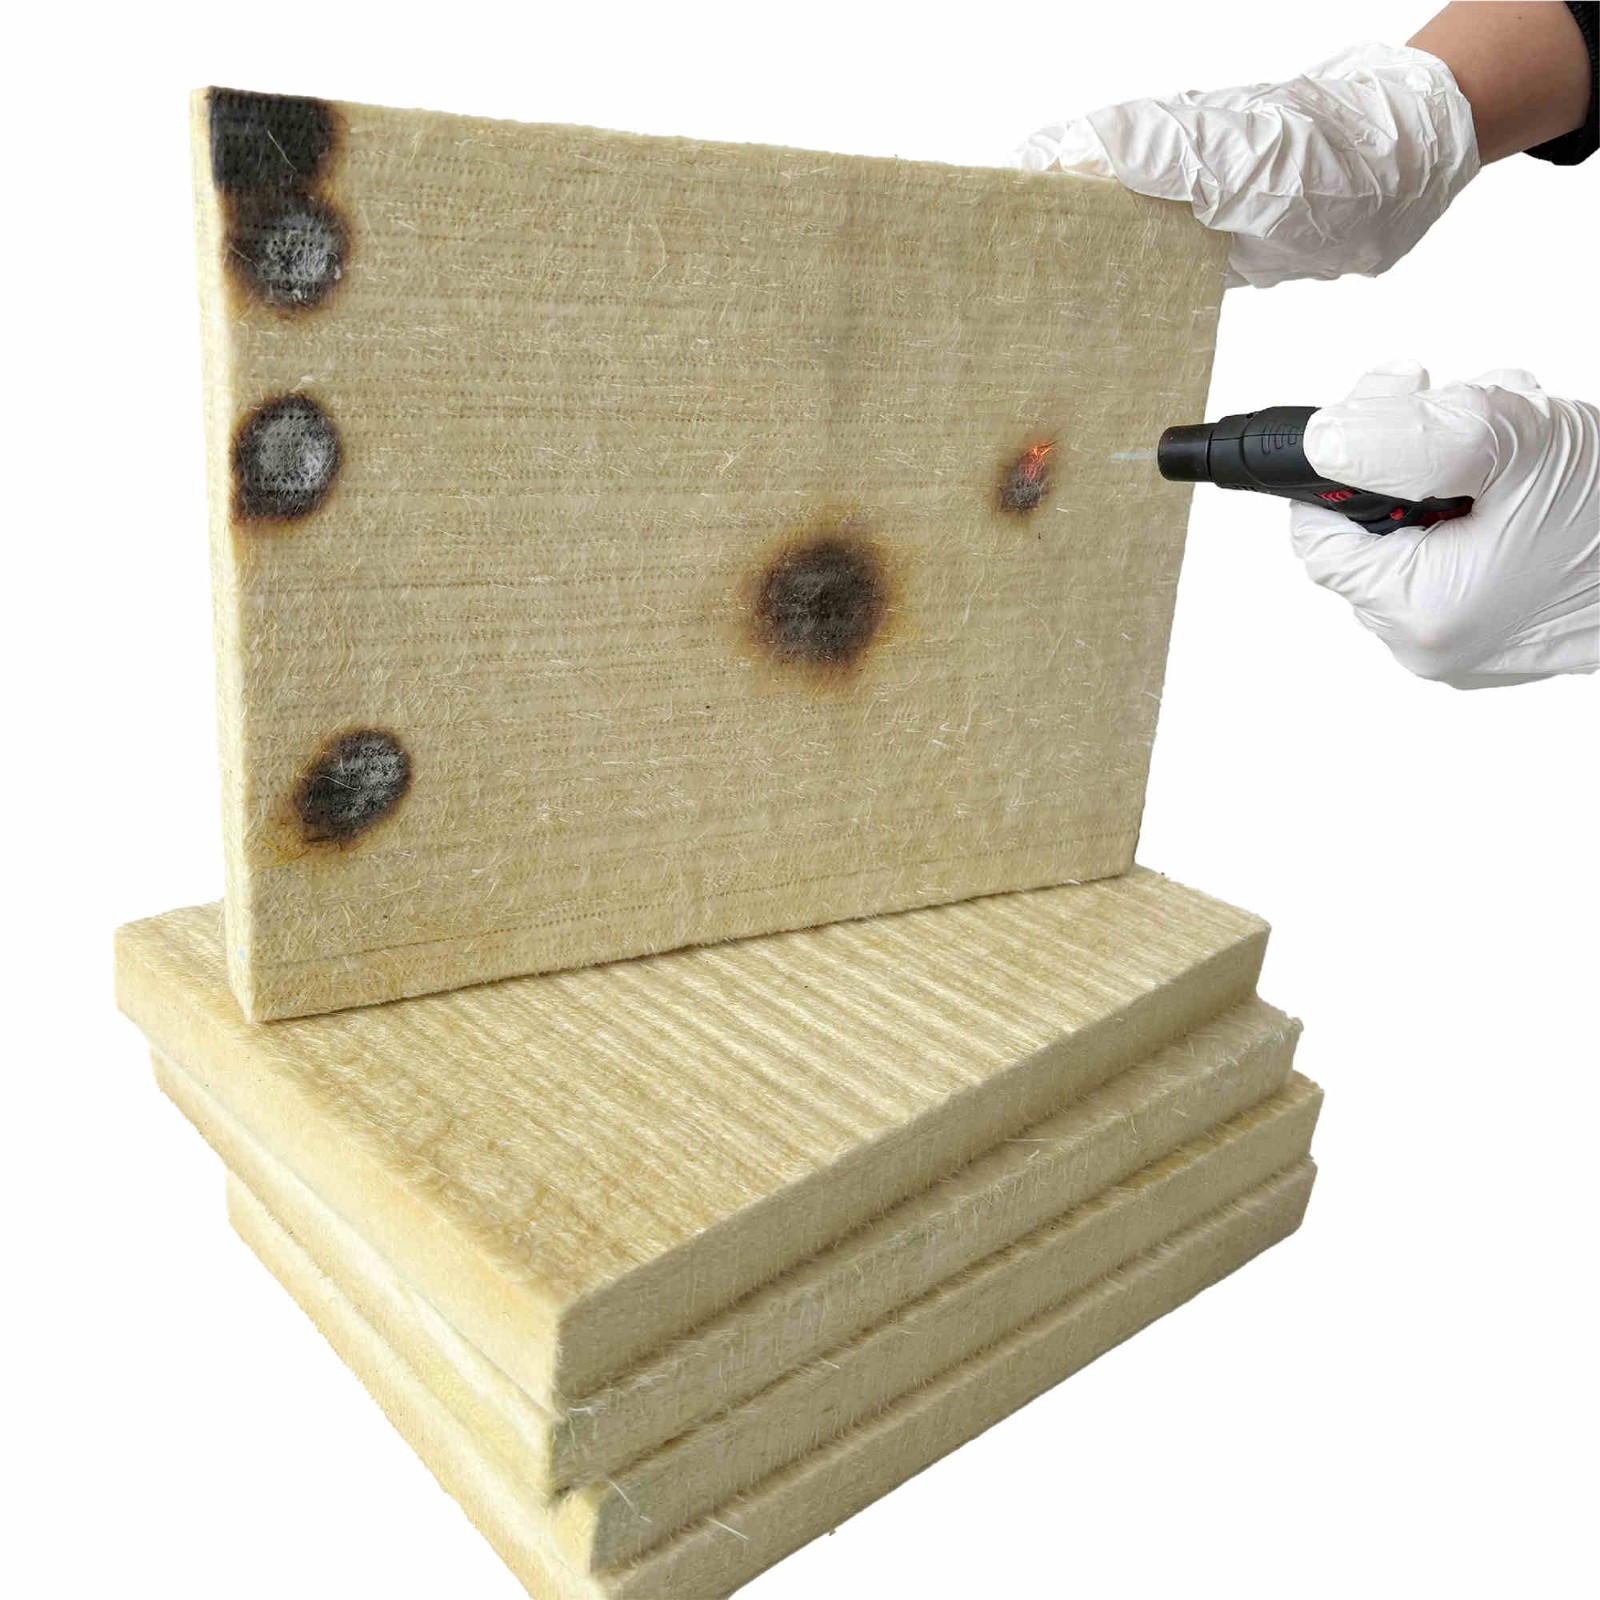 Fireproof insulation board